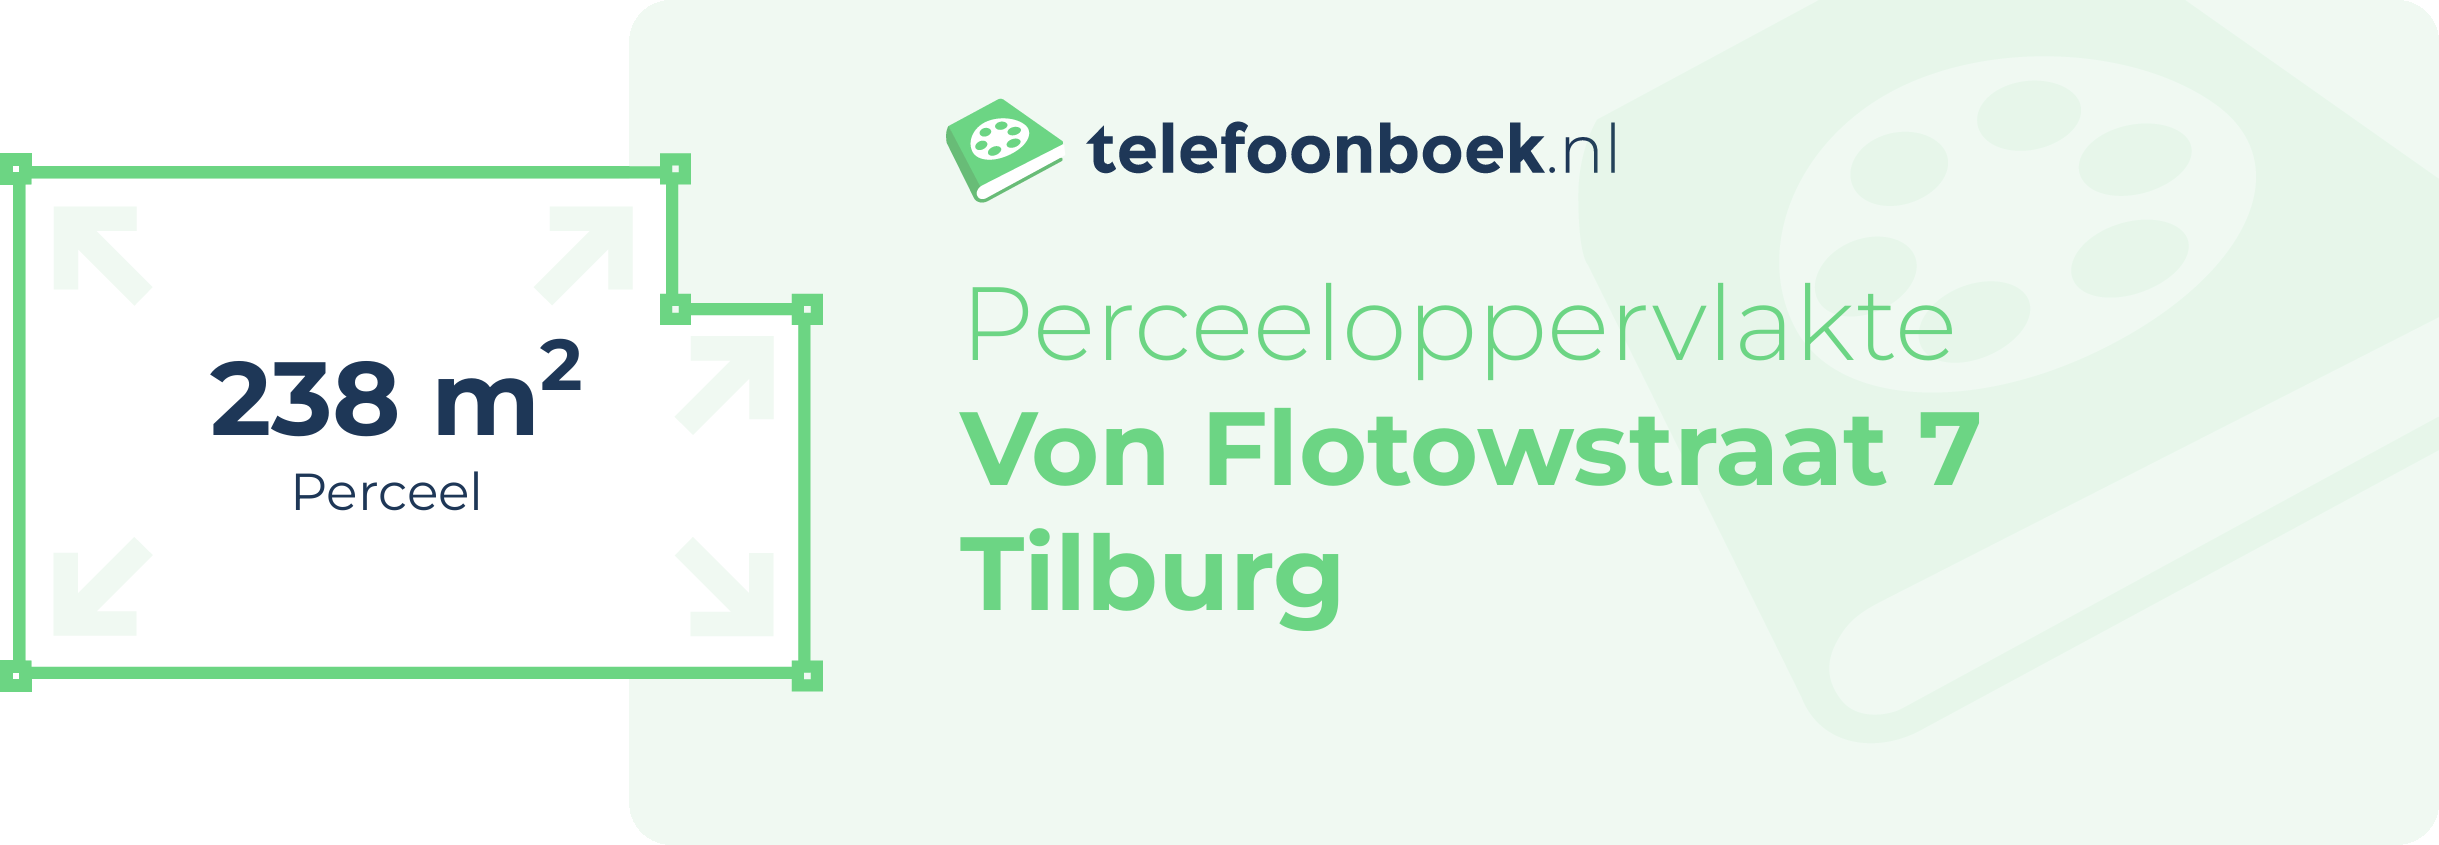 Perceeloppervlakte Von Flotowstraat 7 Tilburg